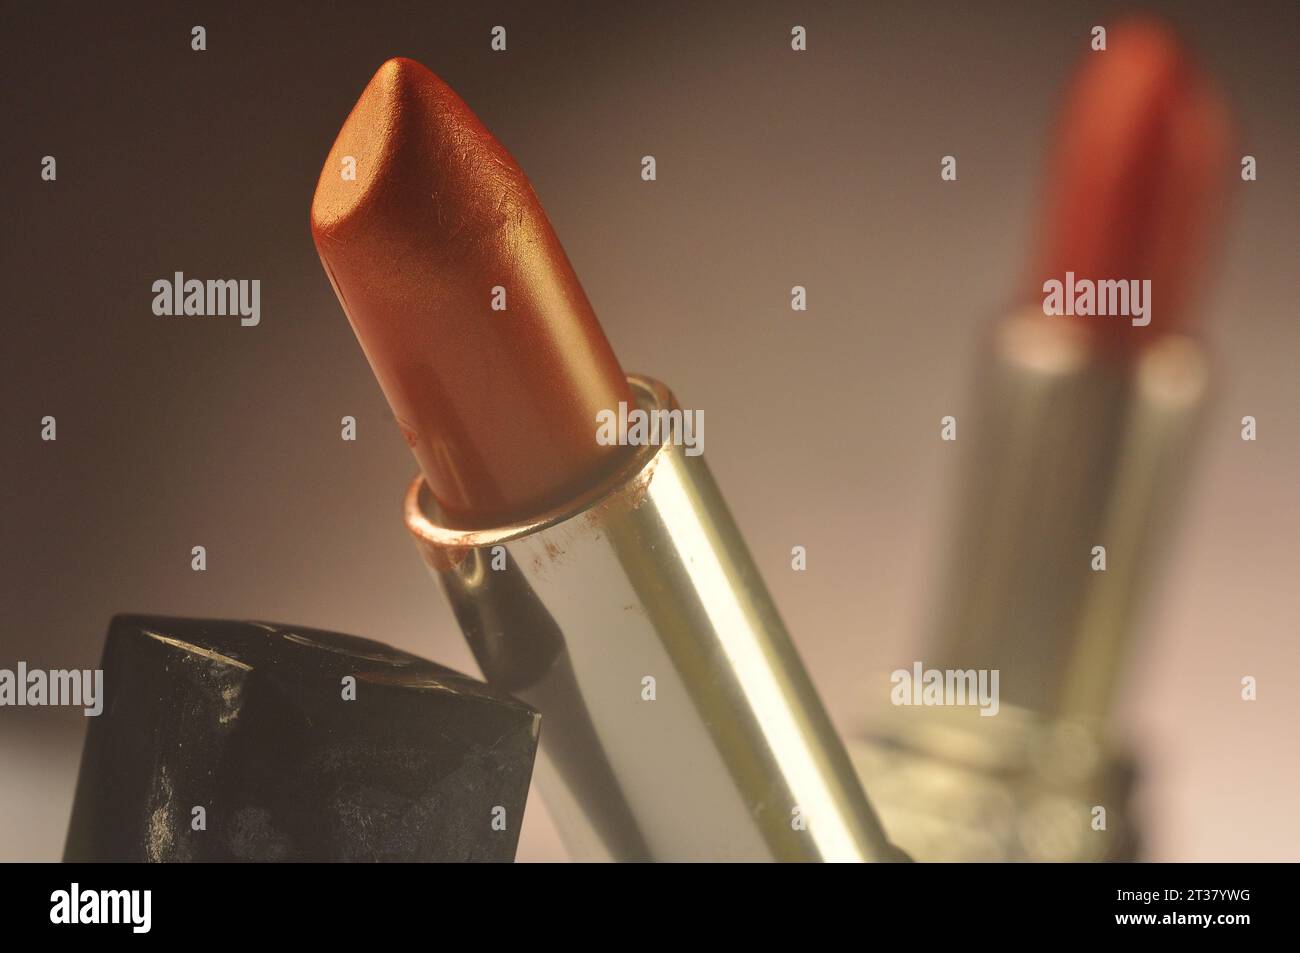 Lipstick close up, studio shot Stock Photo